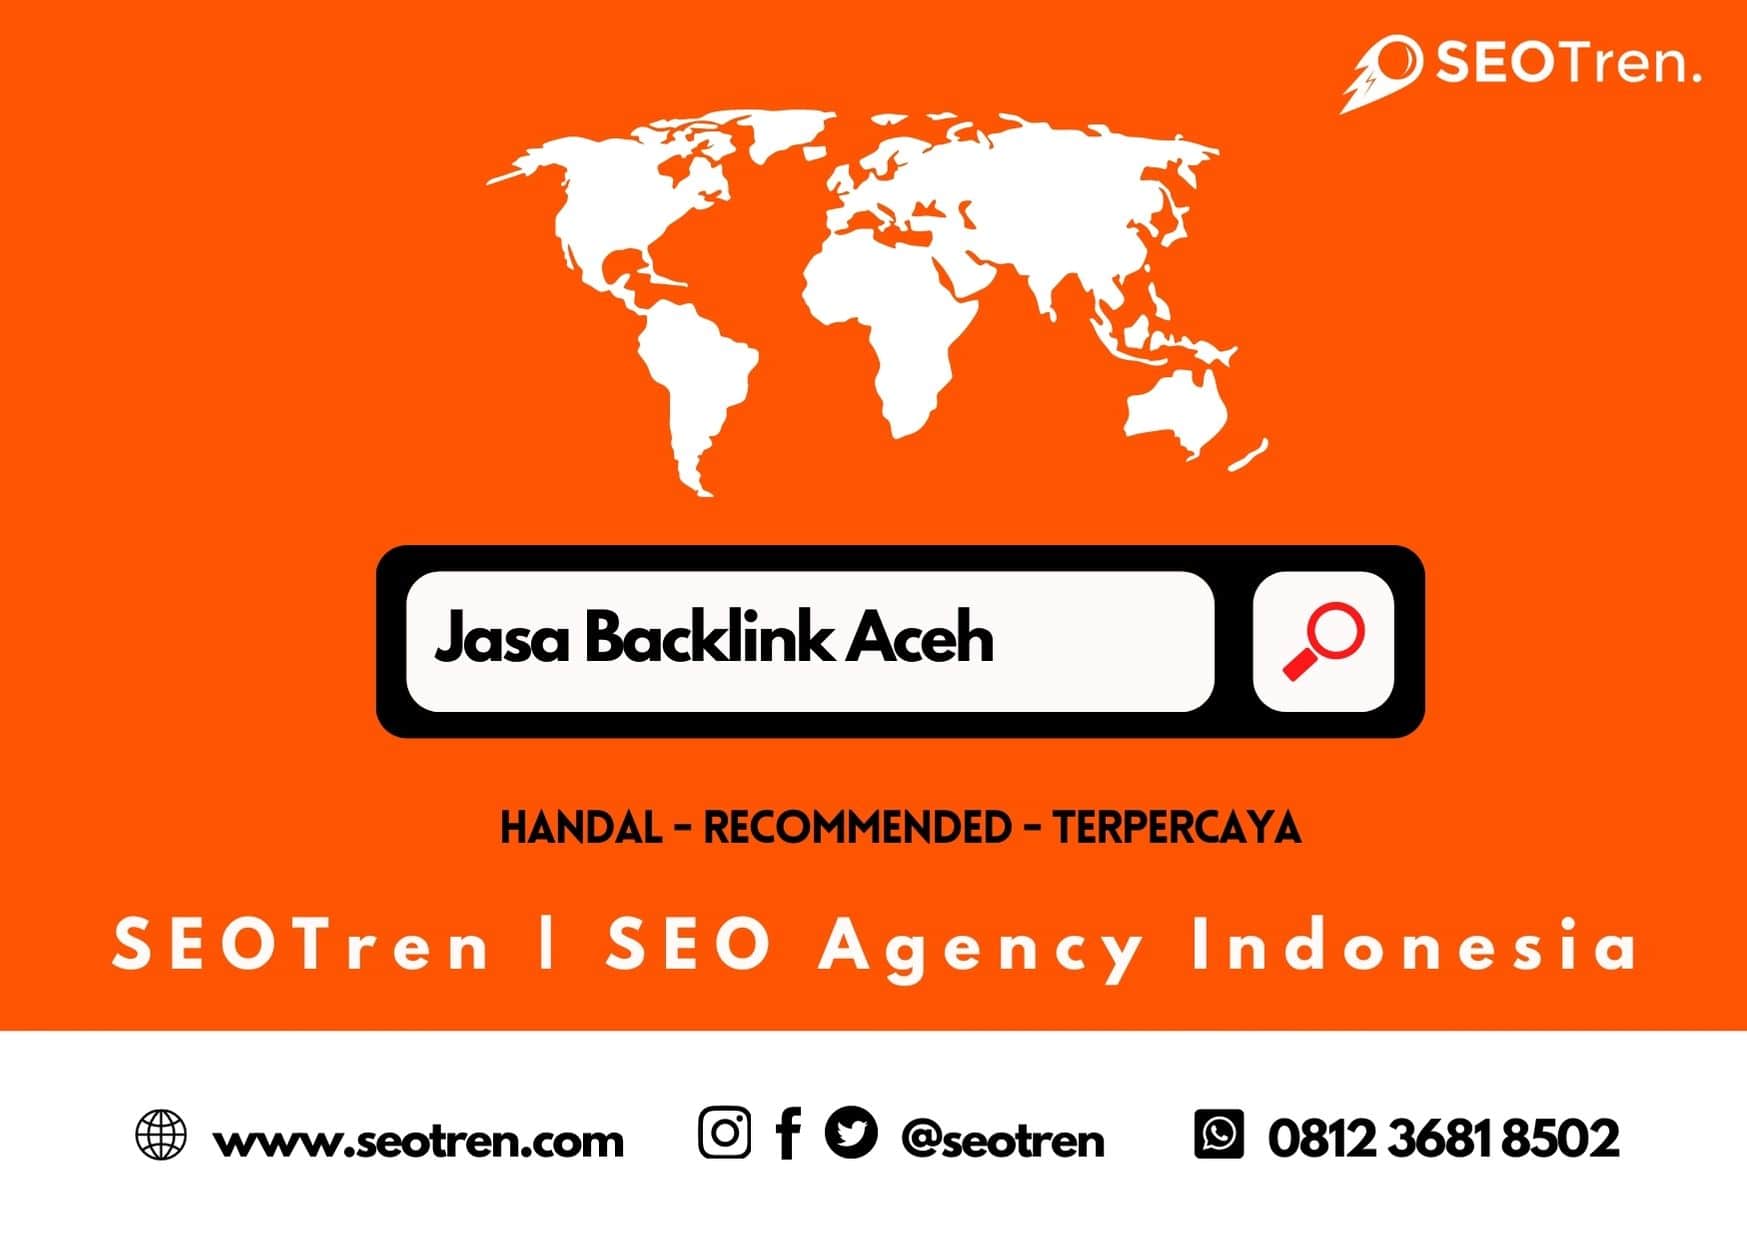 Jasa Backlink Aceh